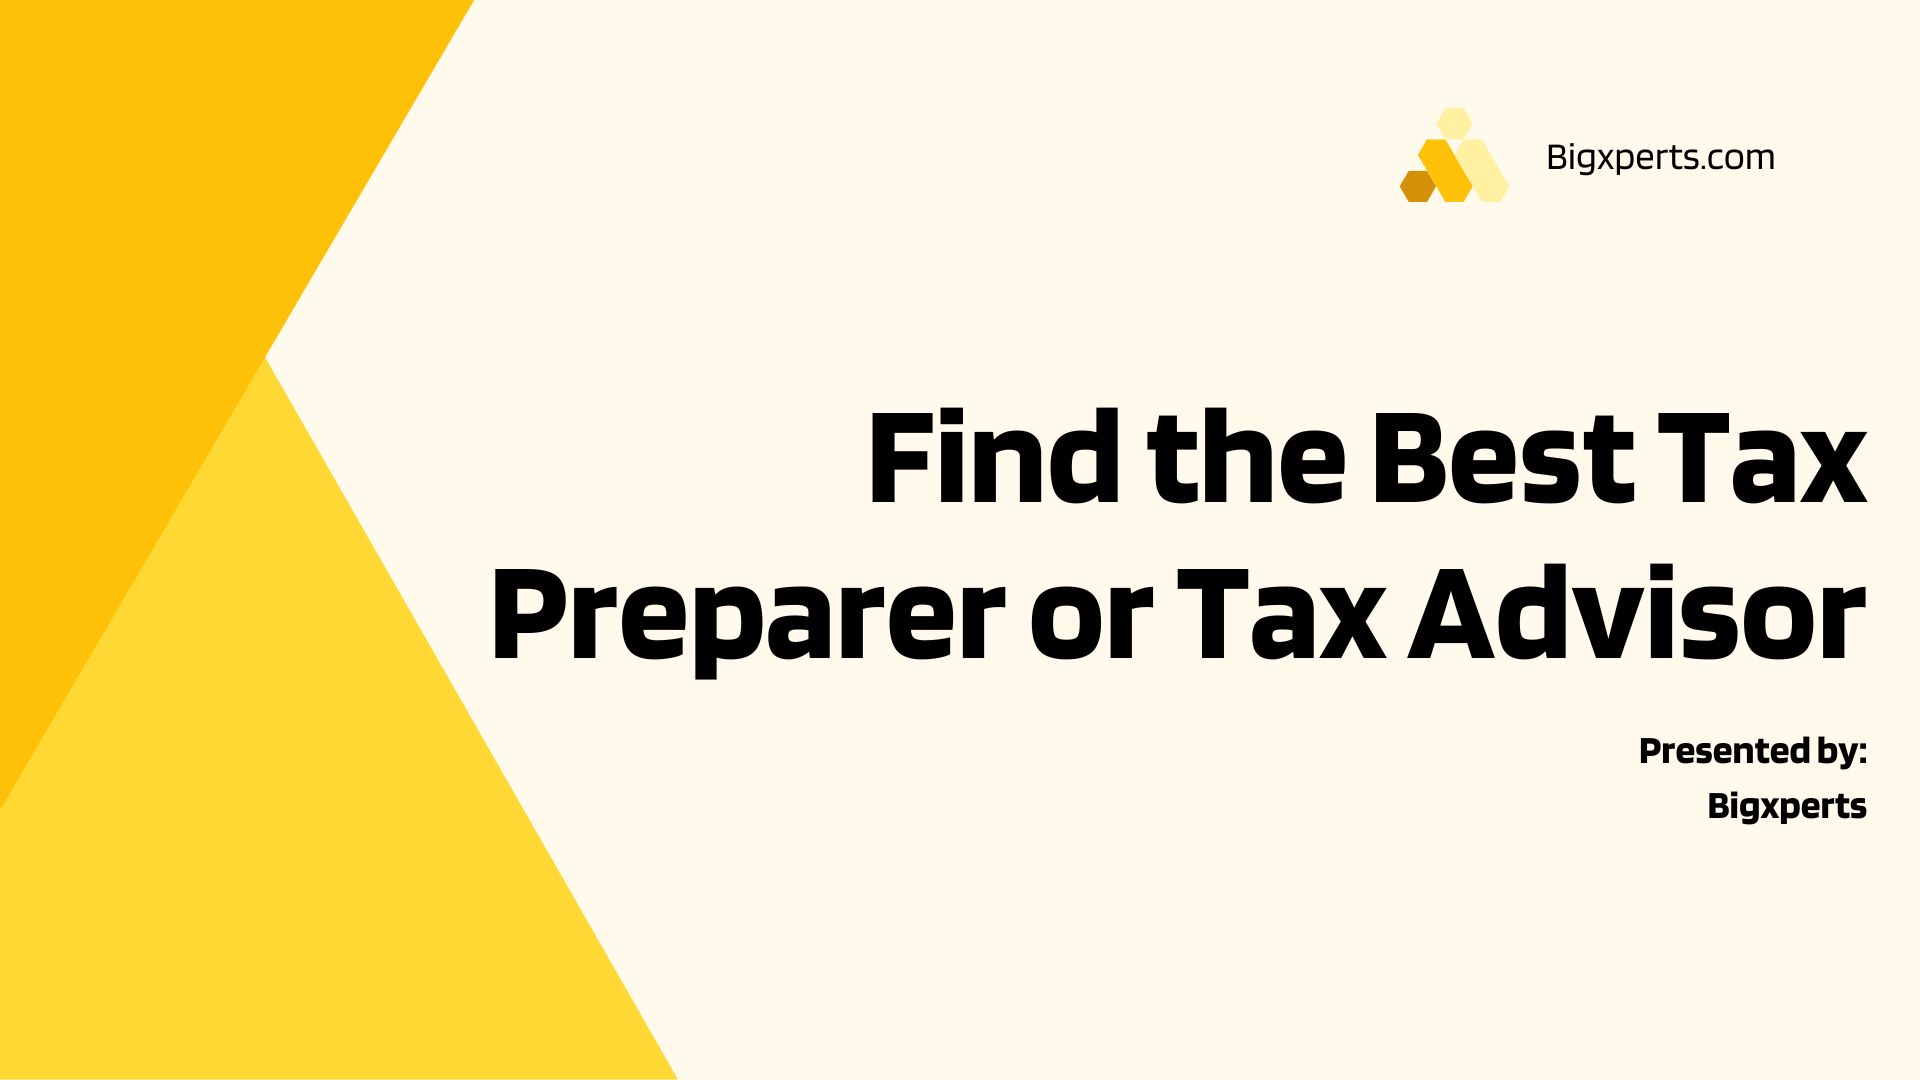 Find the Best Tax Preparer or Tax Advisor